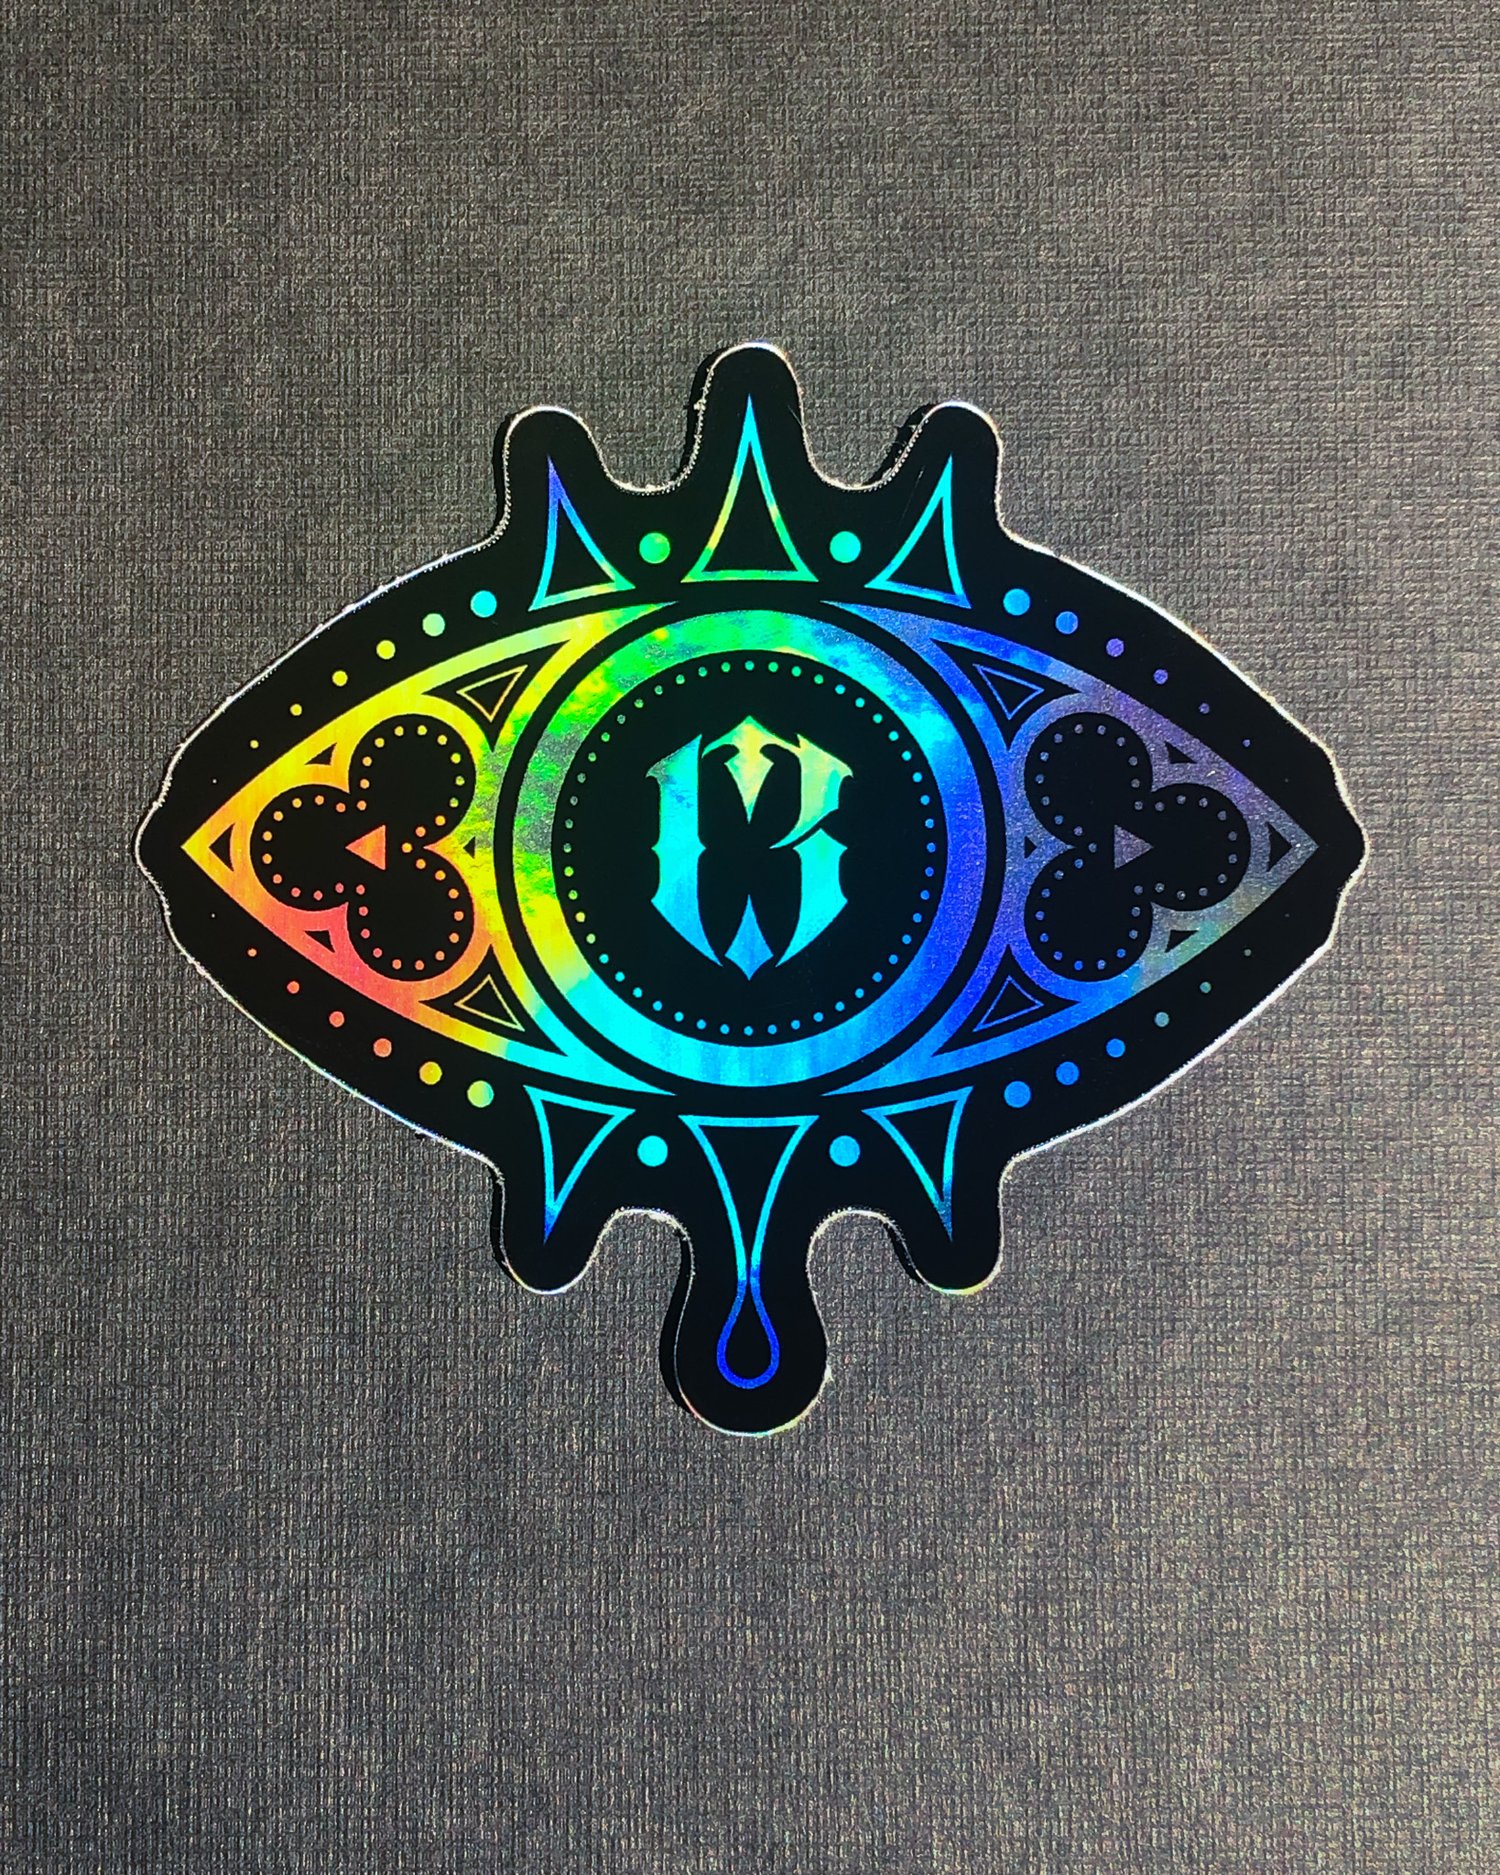 Merrick's Evil (13) Eye emblem sticker